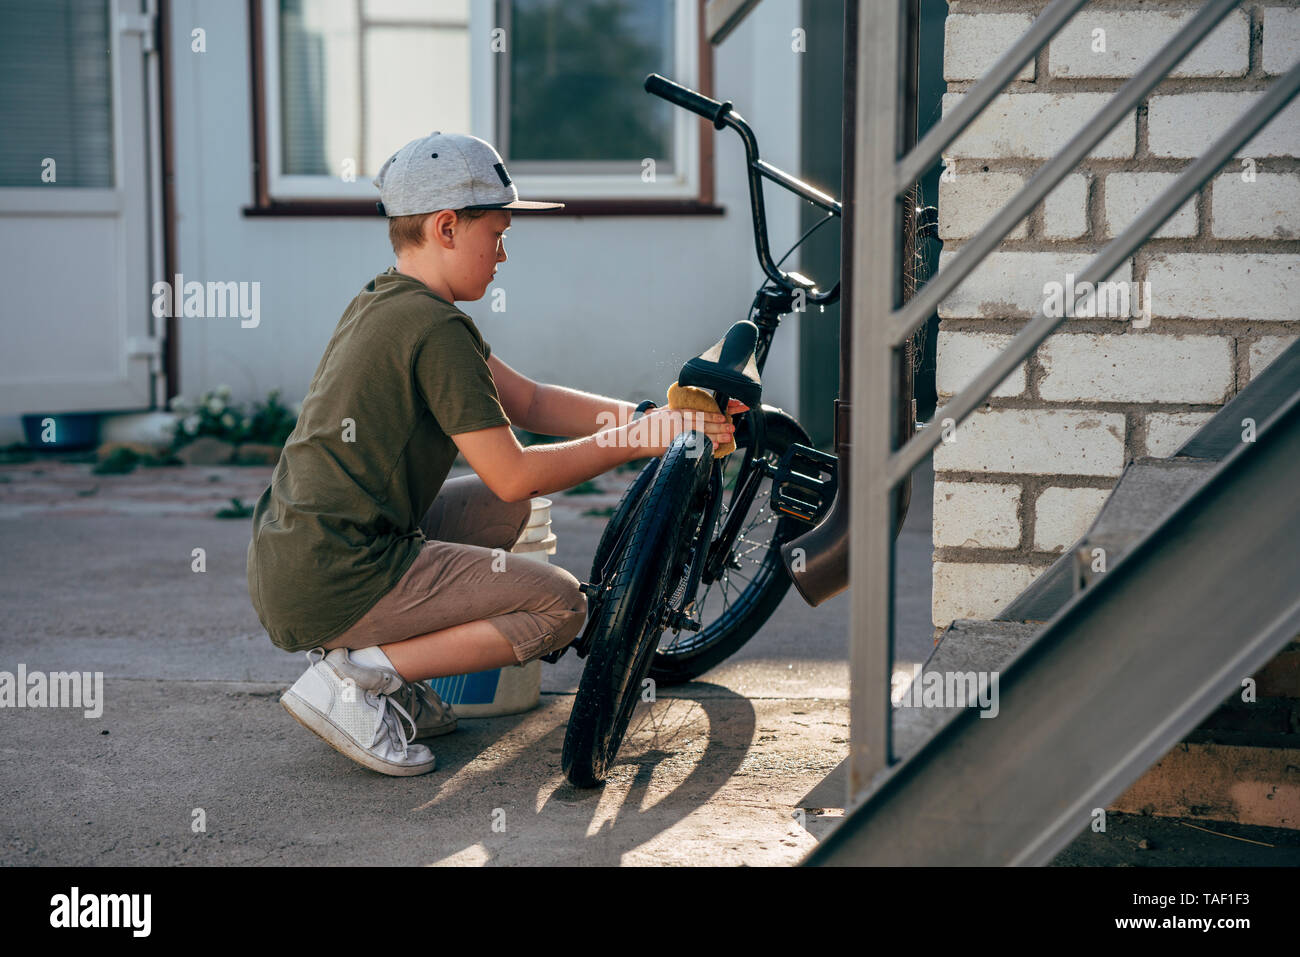 Boy cleaning bmx bike on yard Stock Photo